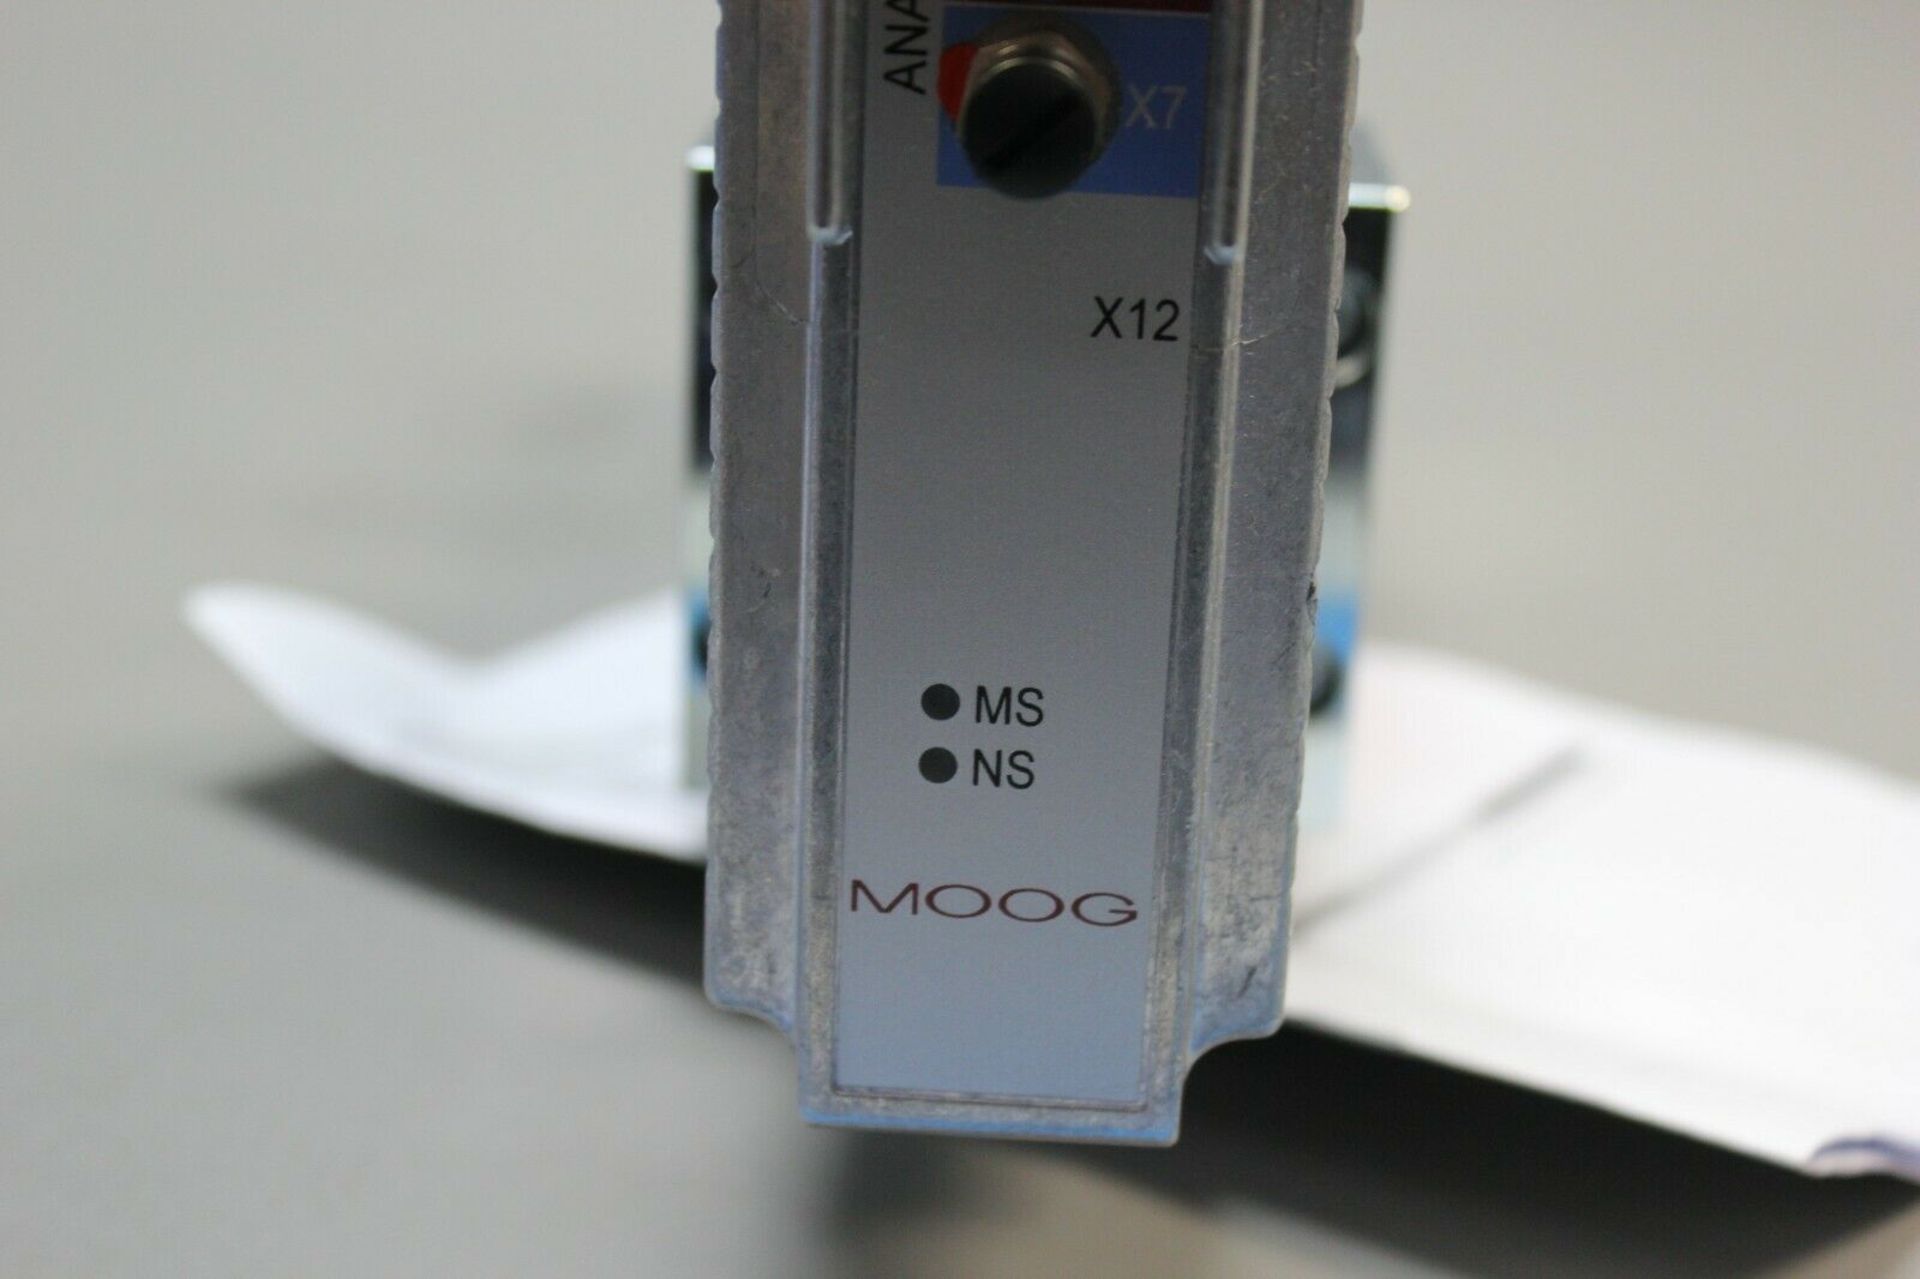 NEW MOOG DIGITAL CONTROL HYDRAULIC SERVO VALVE WITH PROFIBUS - Image 10 of 12